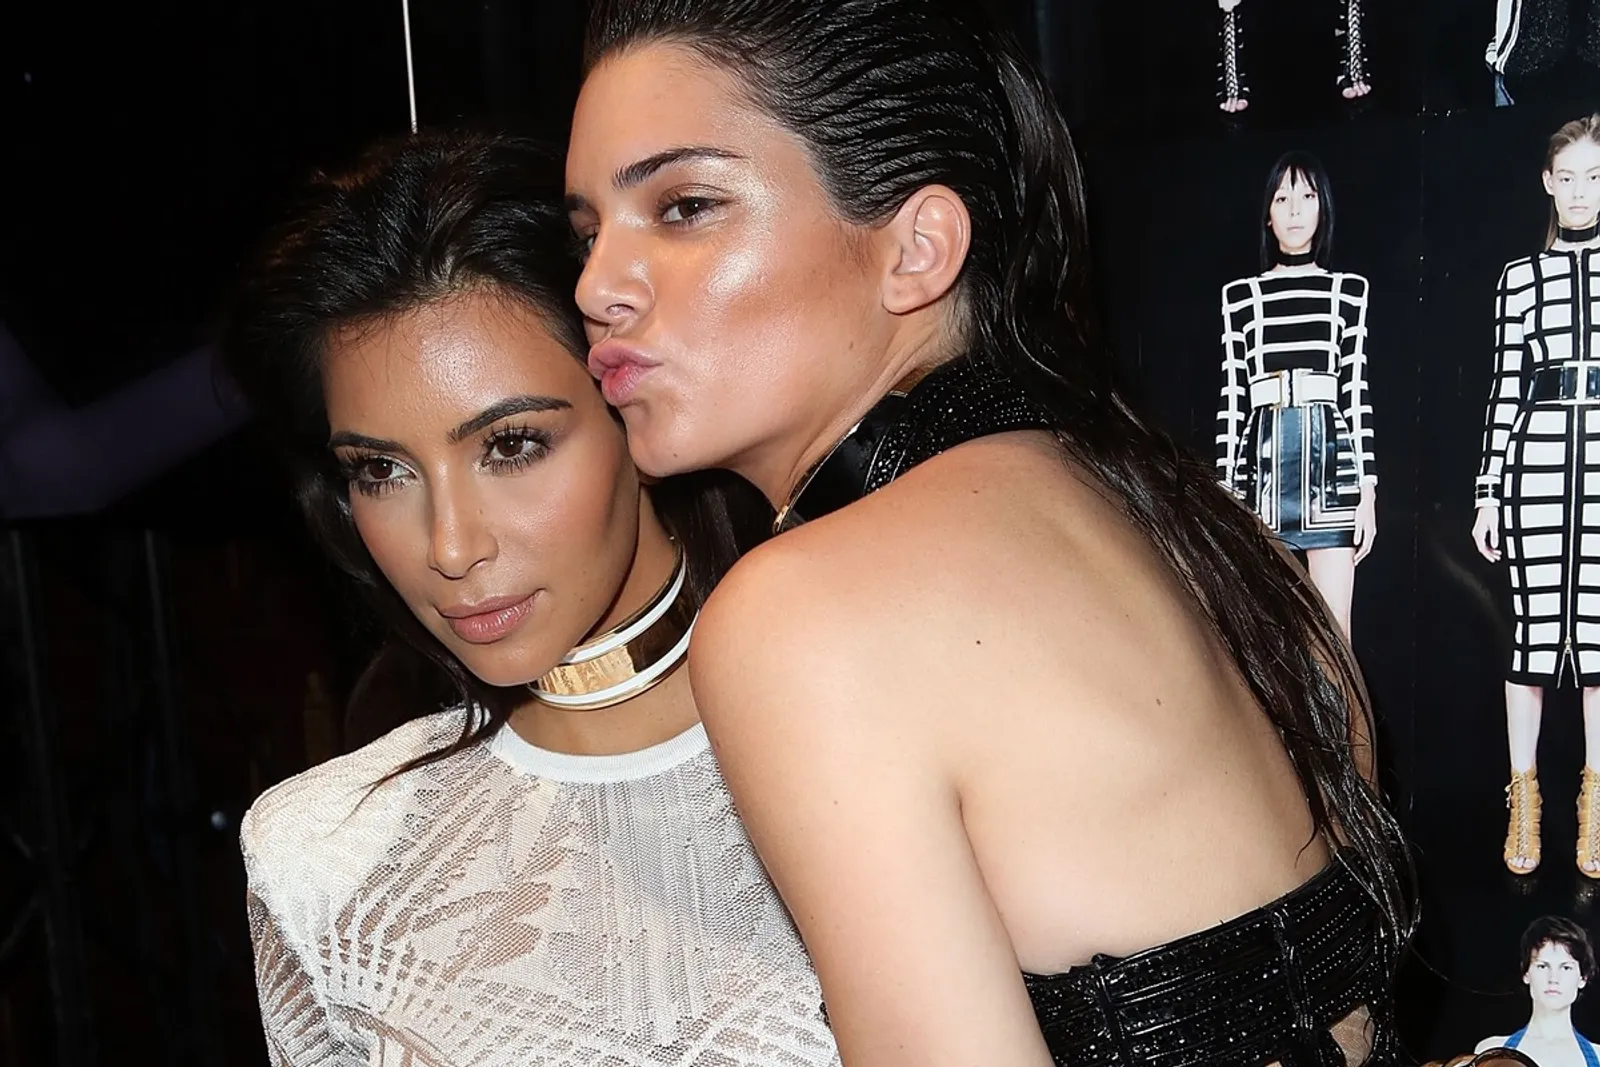 Heboh! Kim Kardashian West dan Kendall Jenner akan Main Film Layar Lebar